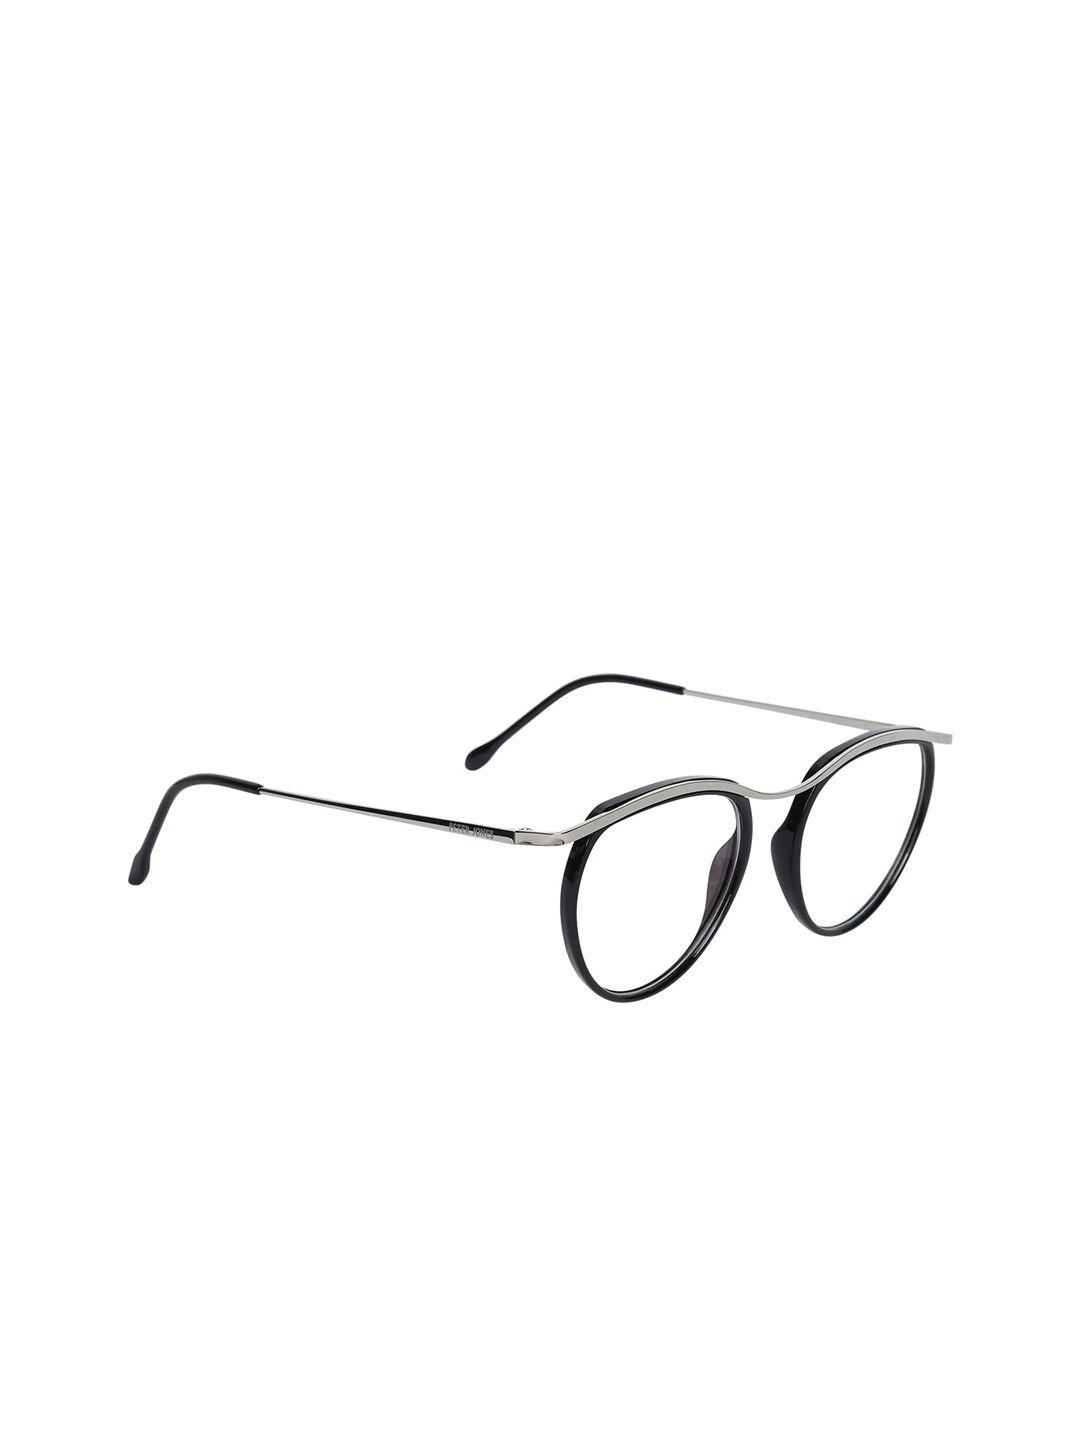 peter jones eyewear unisex solid full rim optical cateye frames 1544s